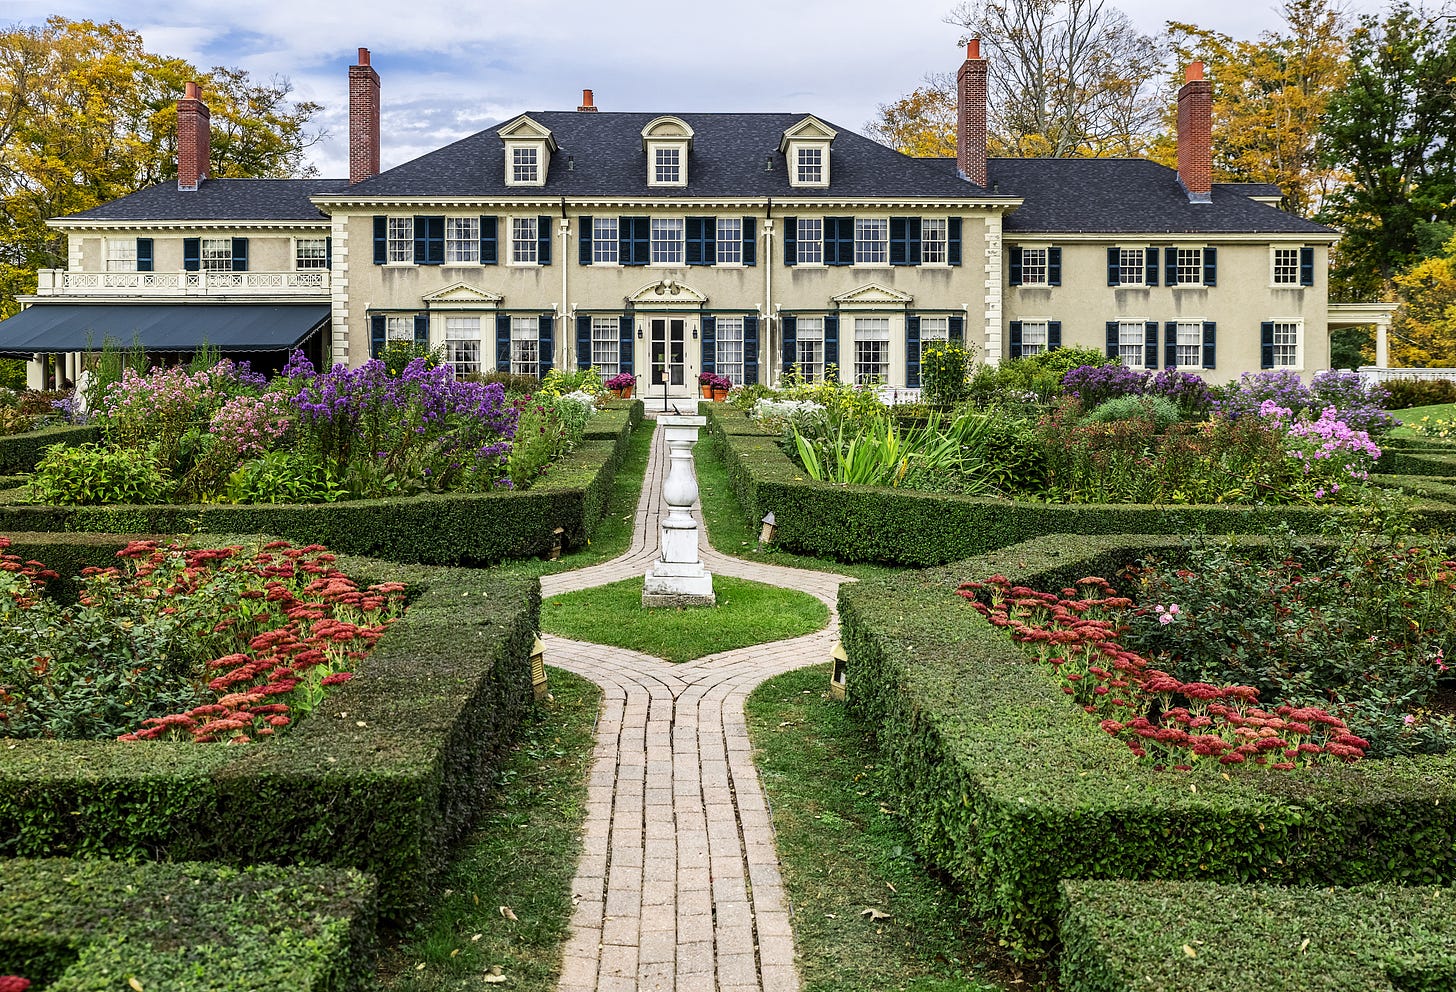 Hildene mansion and formal garden at Manchester in Vermont.